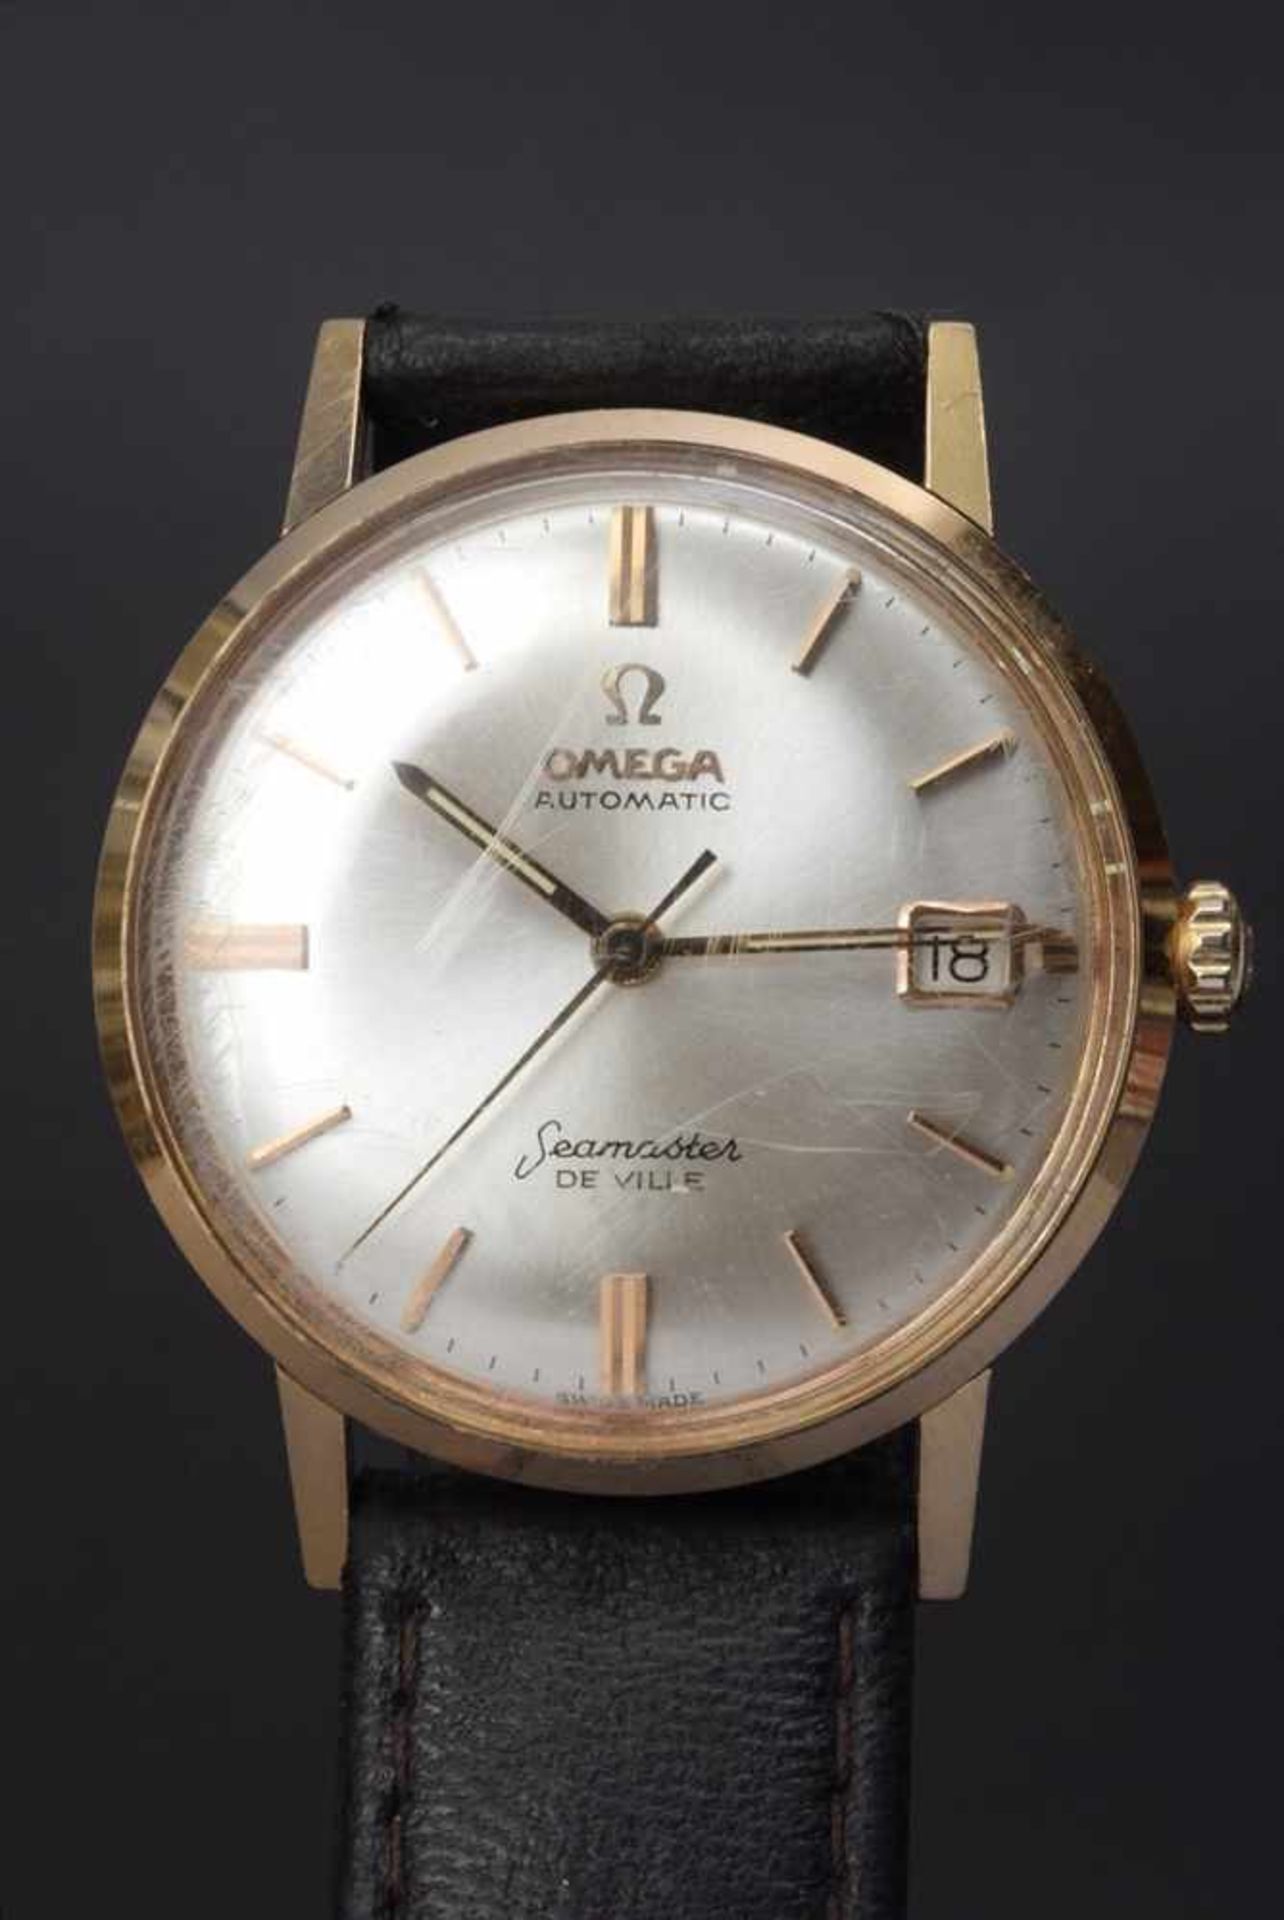 GG 750 Omega "Seamaster de Ville" men's watch, chronograph, automatic, silver-coloured dial with bar - Bild 5 aus 5